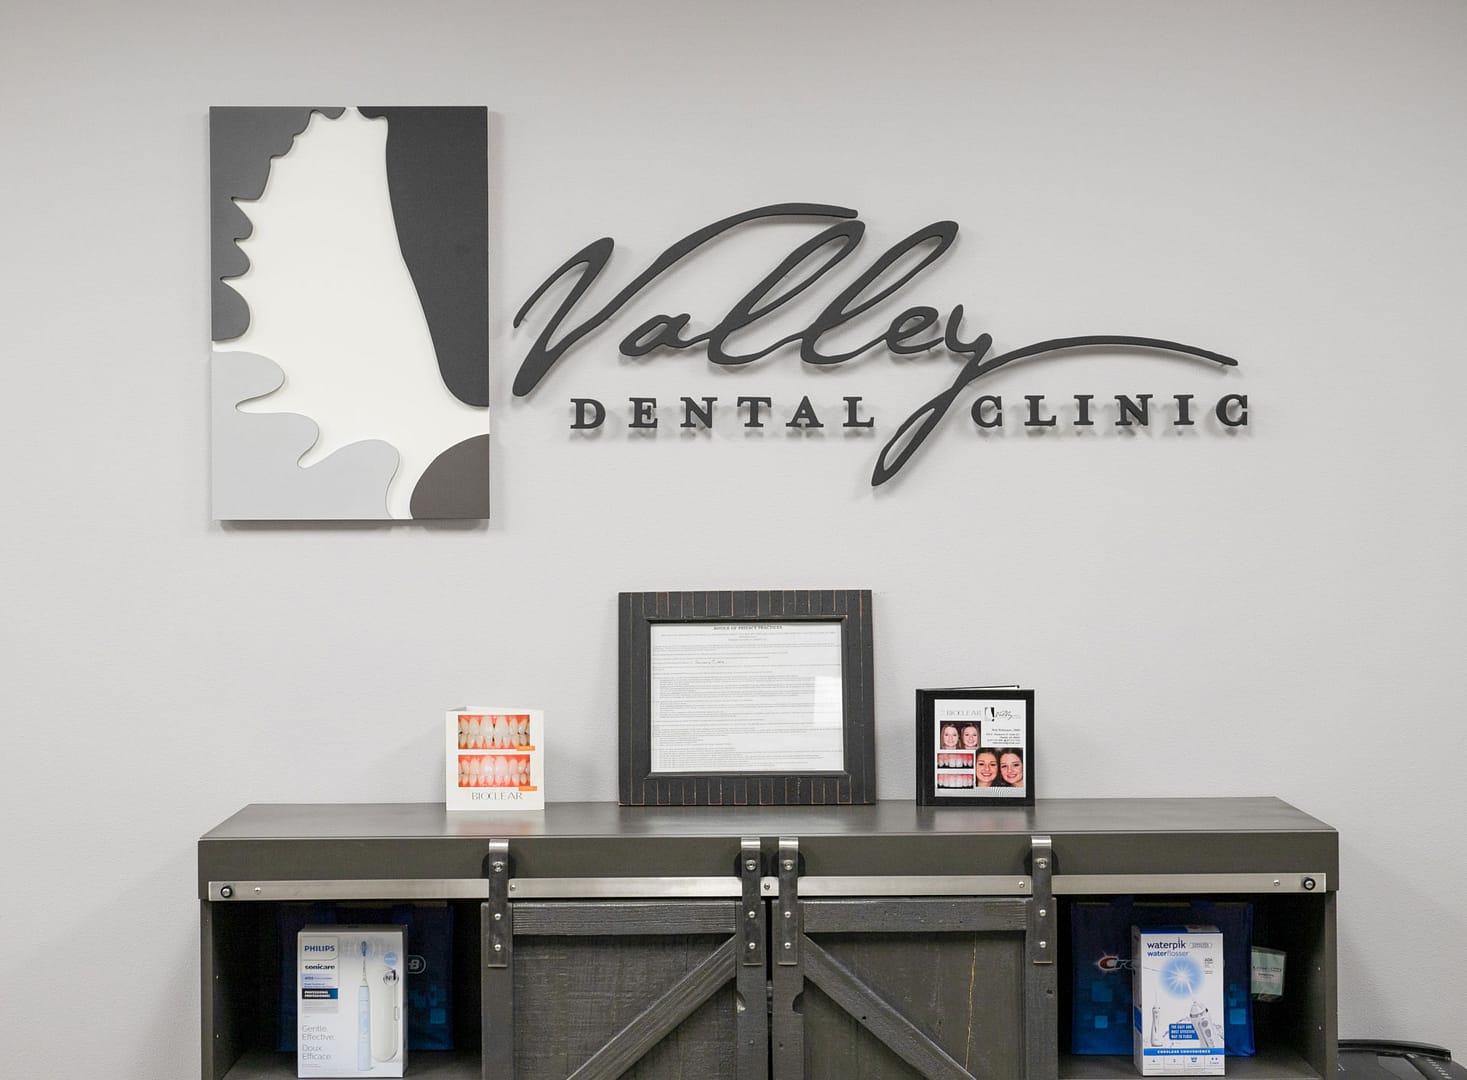 valley dental clinic logo on wall